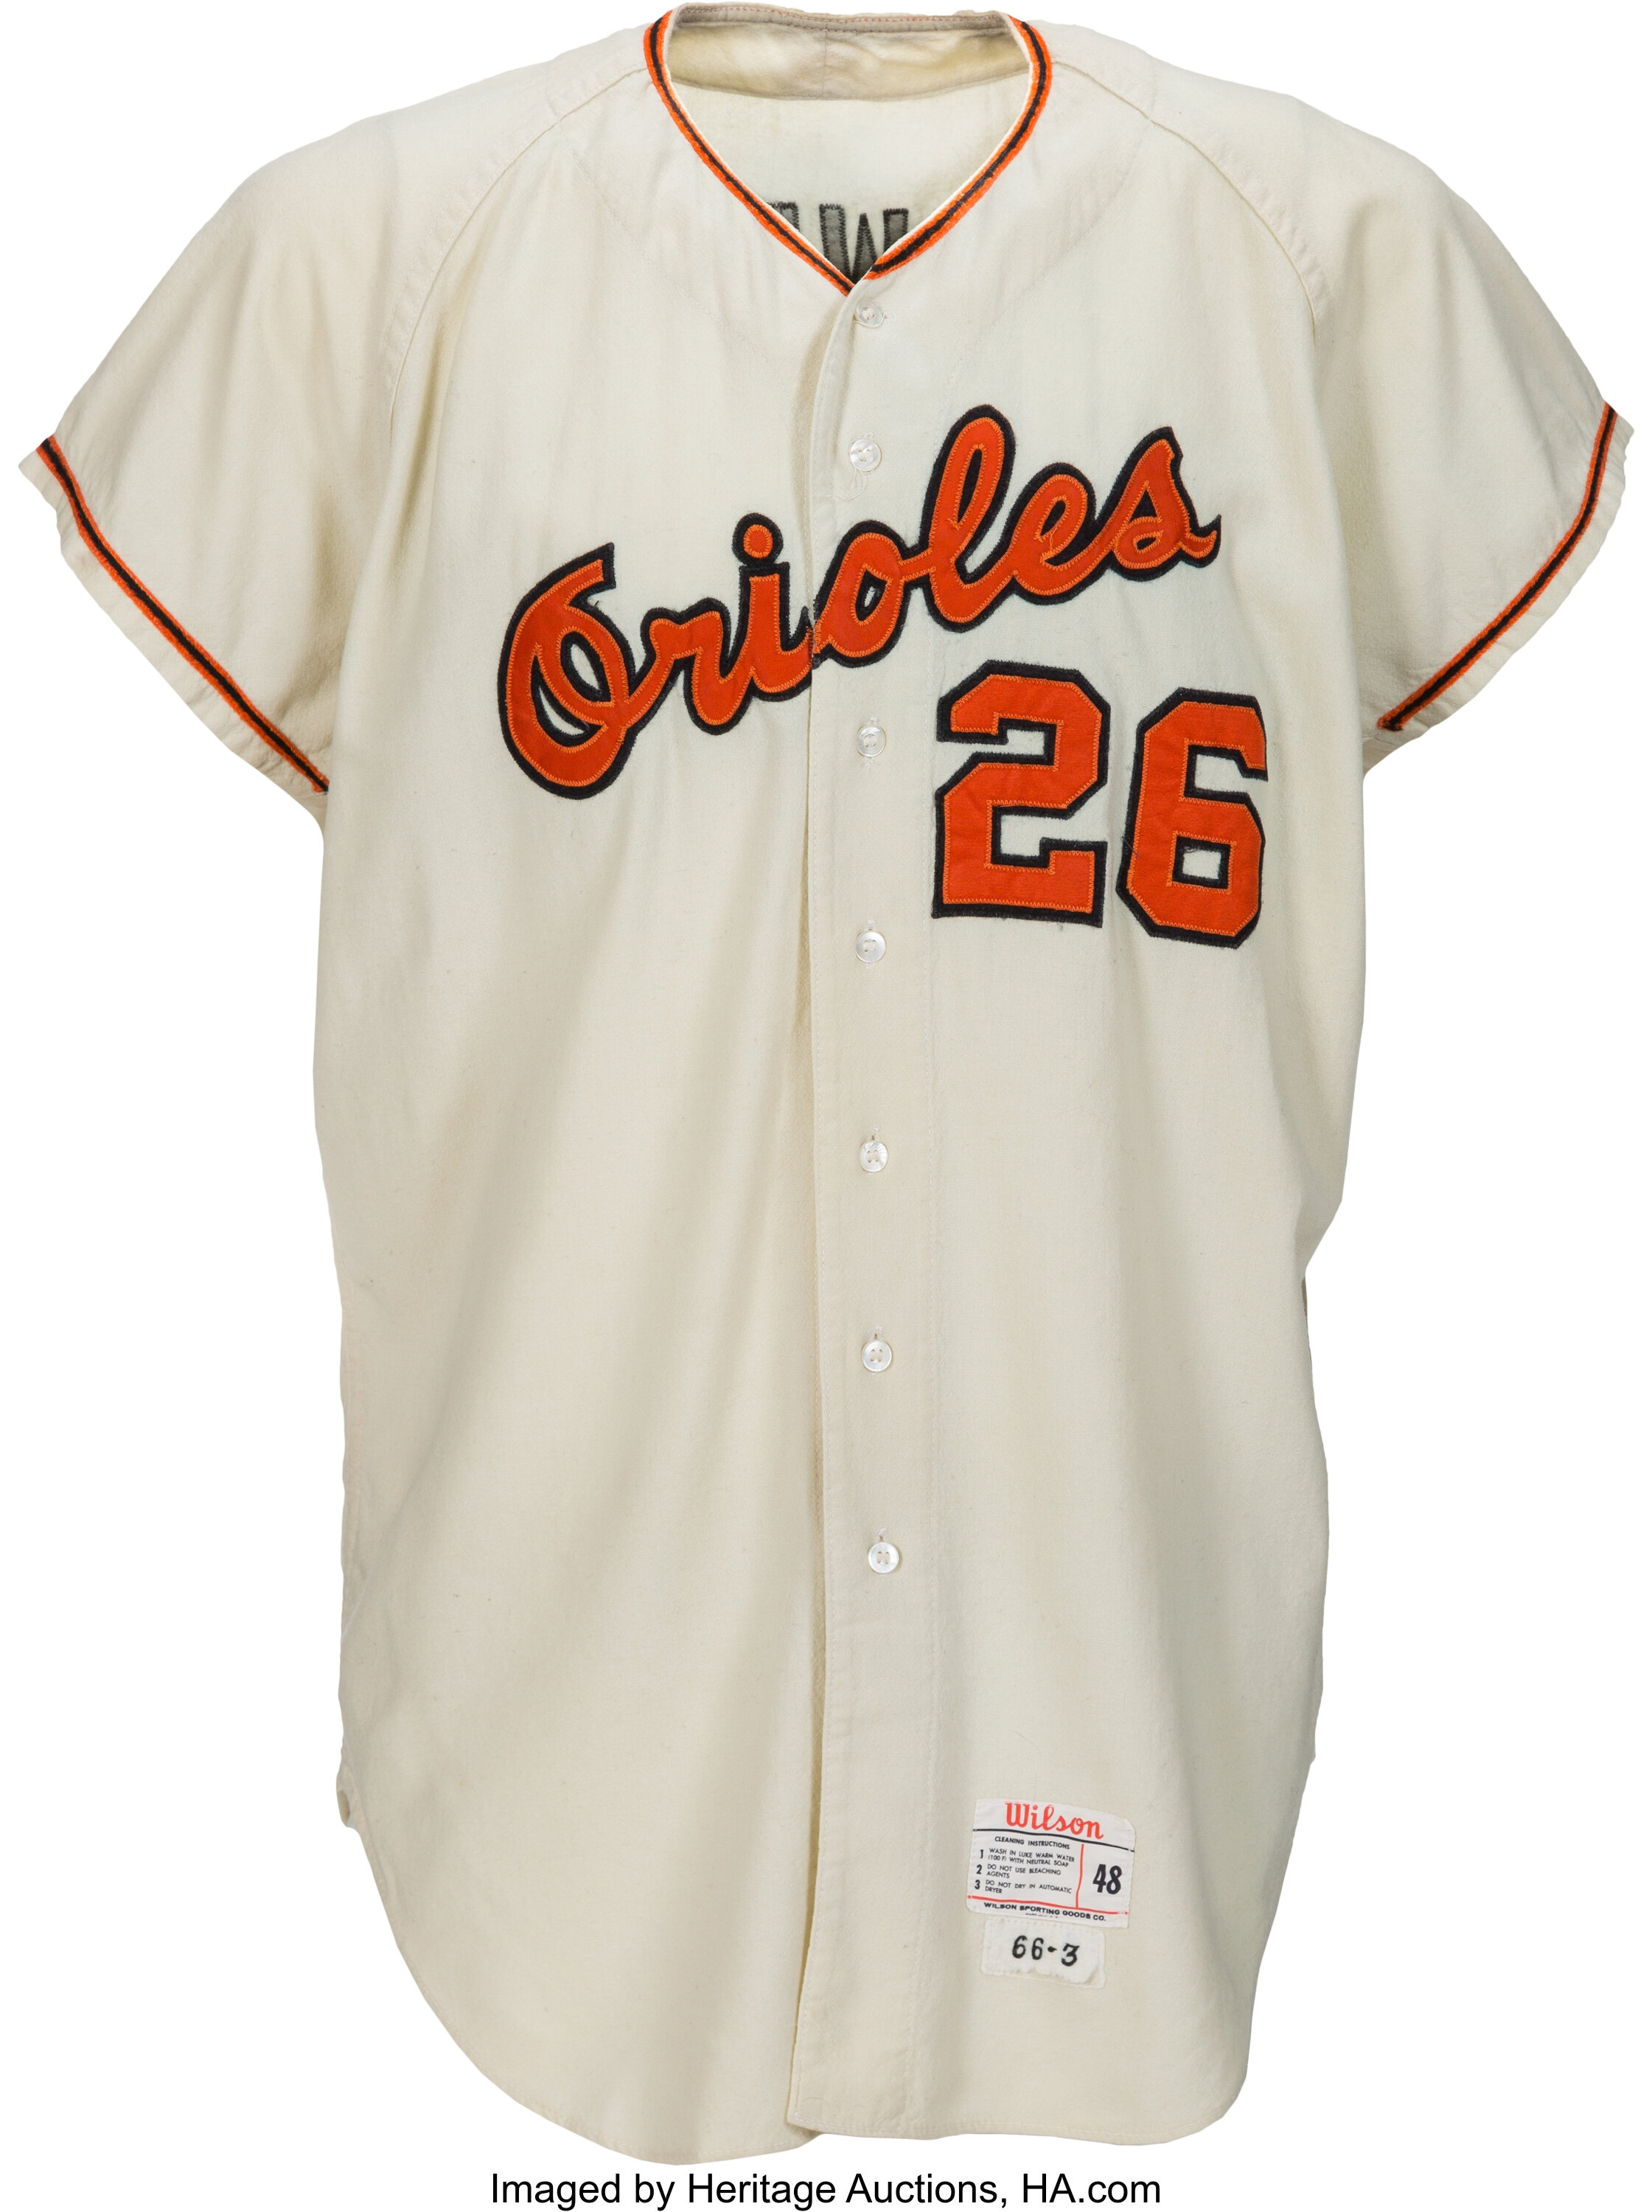 Baltimore Orioles: Uniform Analysis of the 1966-1970 O's